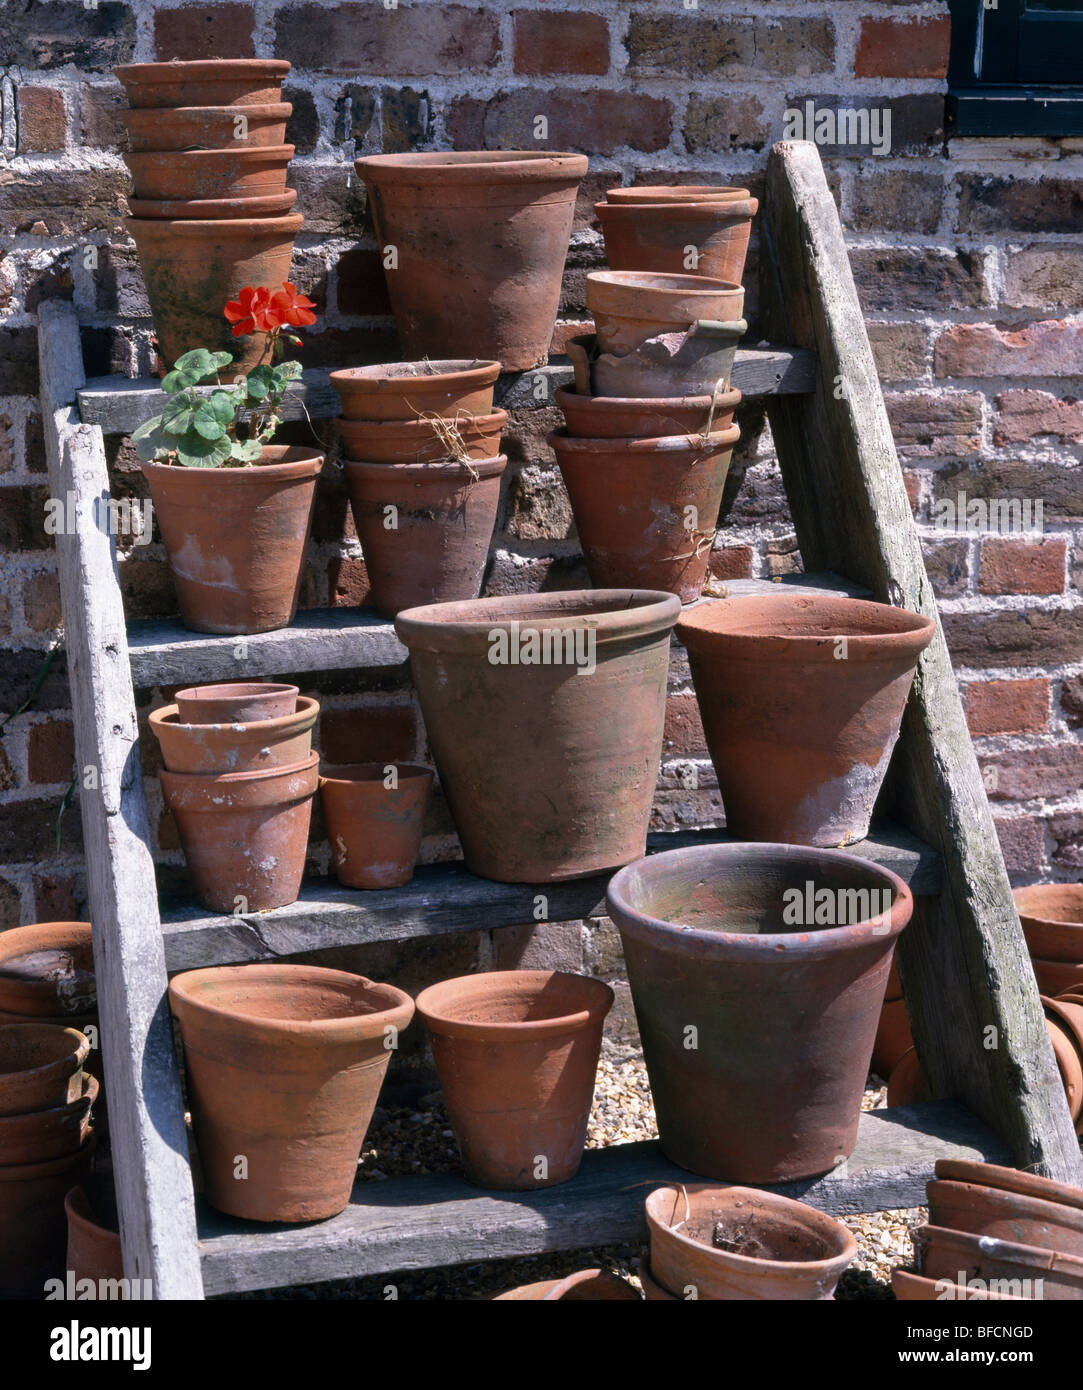 Nahaufnahme der alten Terrakotta-Blumentöpfe auf rustikale Holzregale  Stockfotografie - Alamy